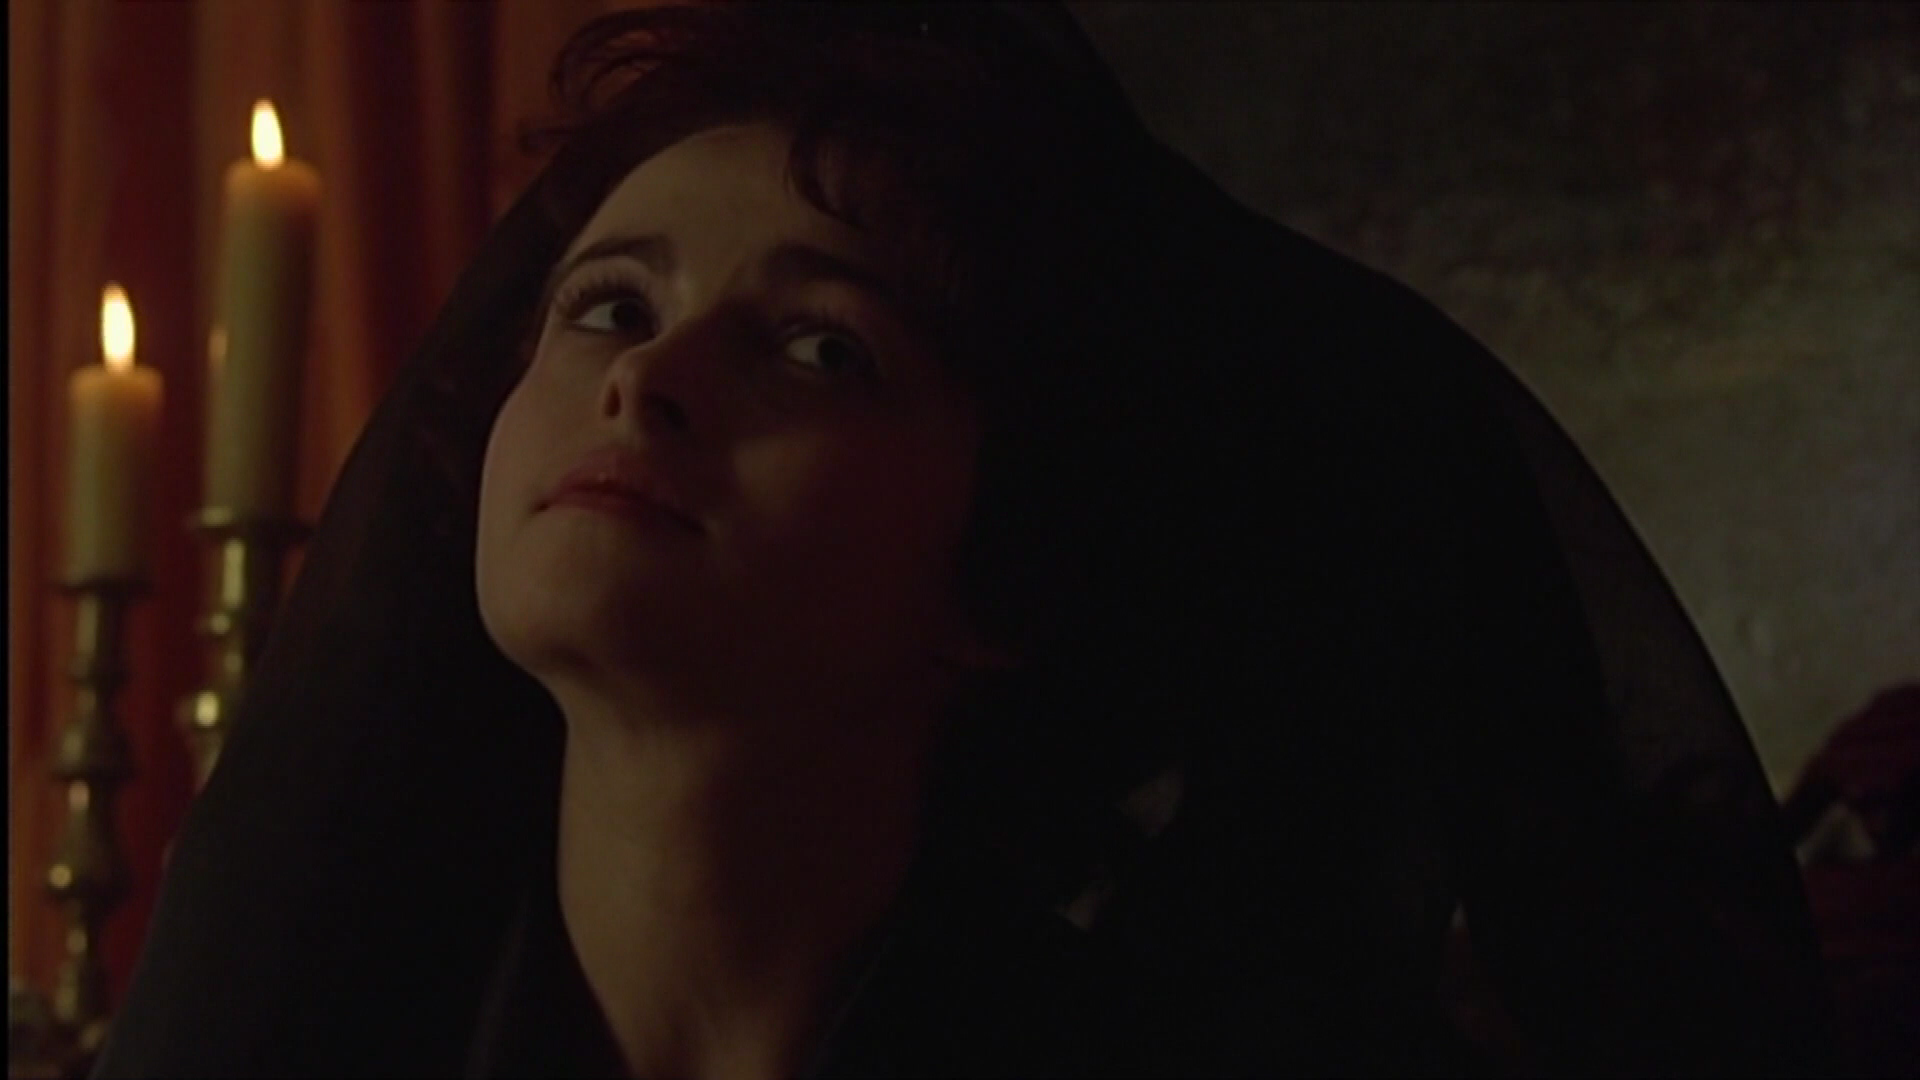 Helena Bonham Carter in Twelfth Night, giving seductive side-eye